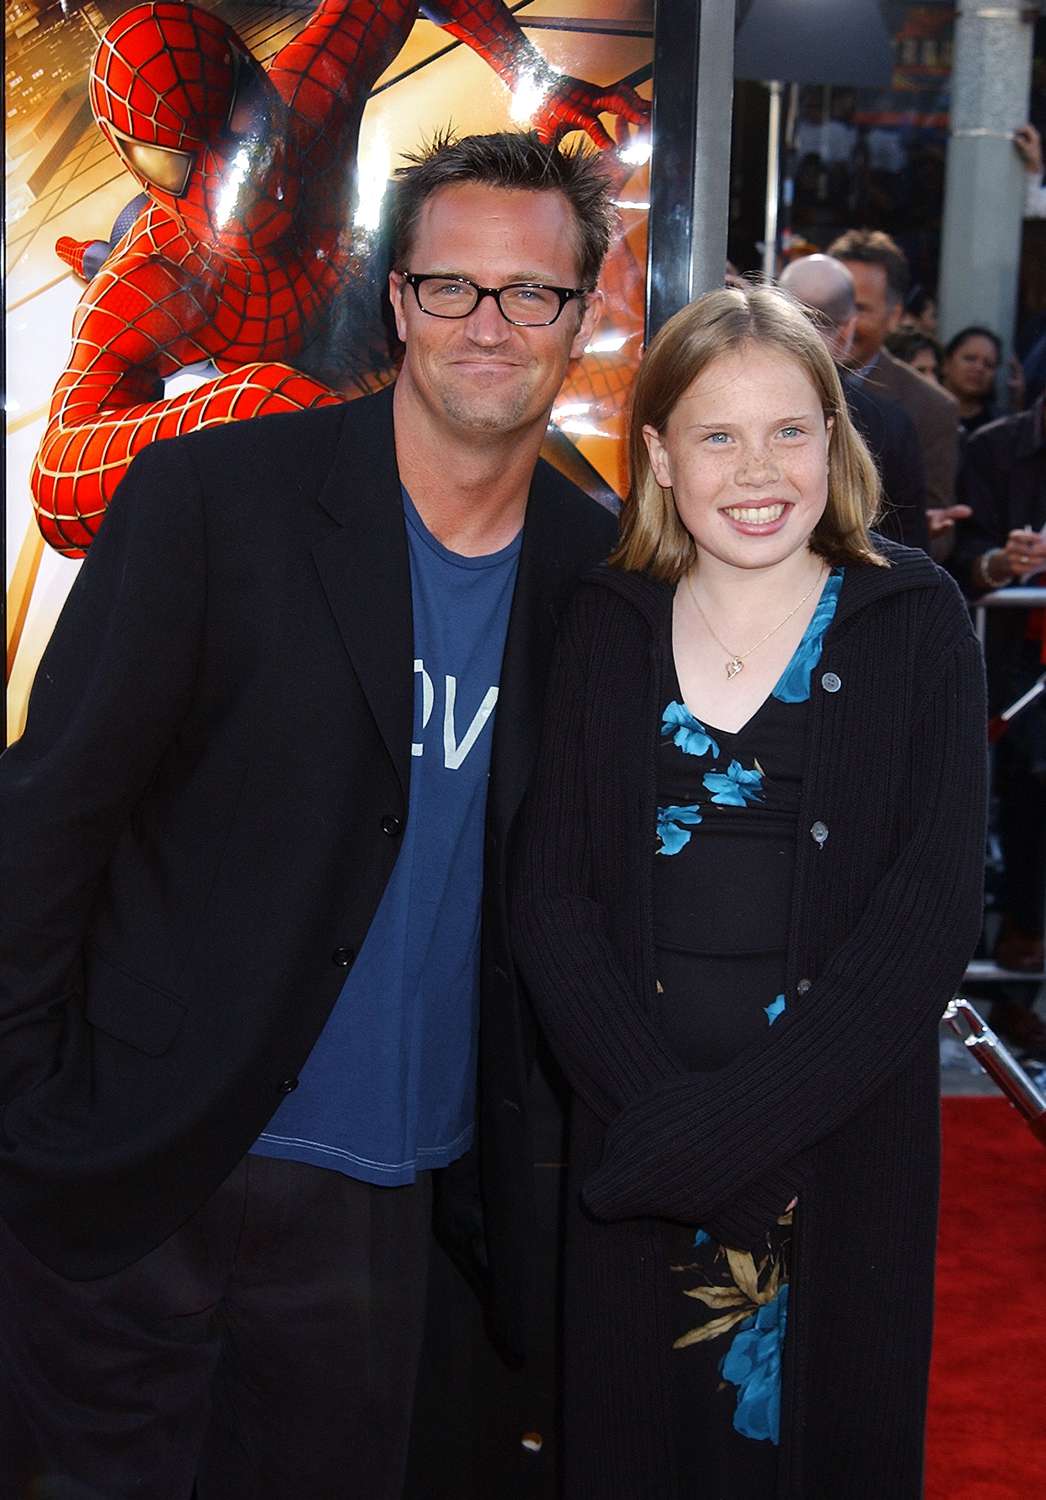 Matthew Perry during "Spider-Man" Premiere at Mann Village in Westwood, California, United States